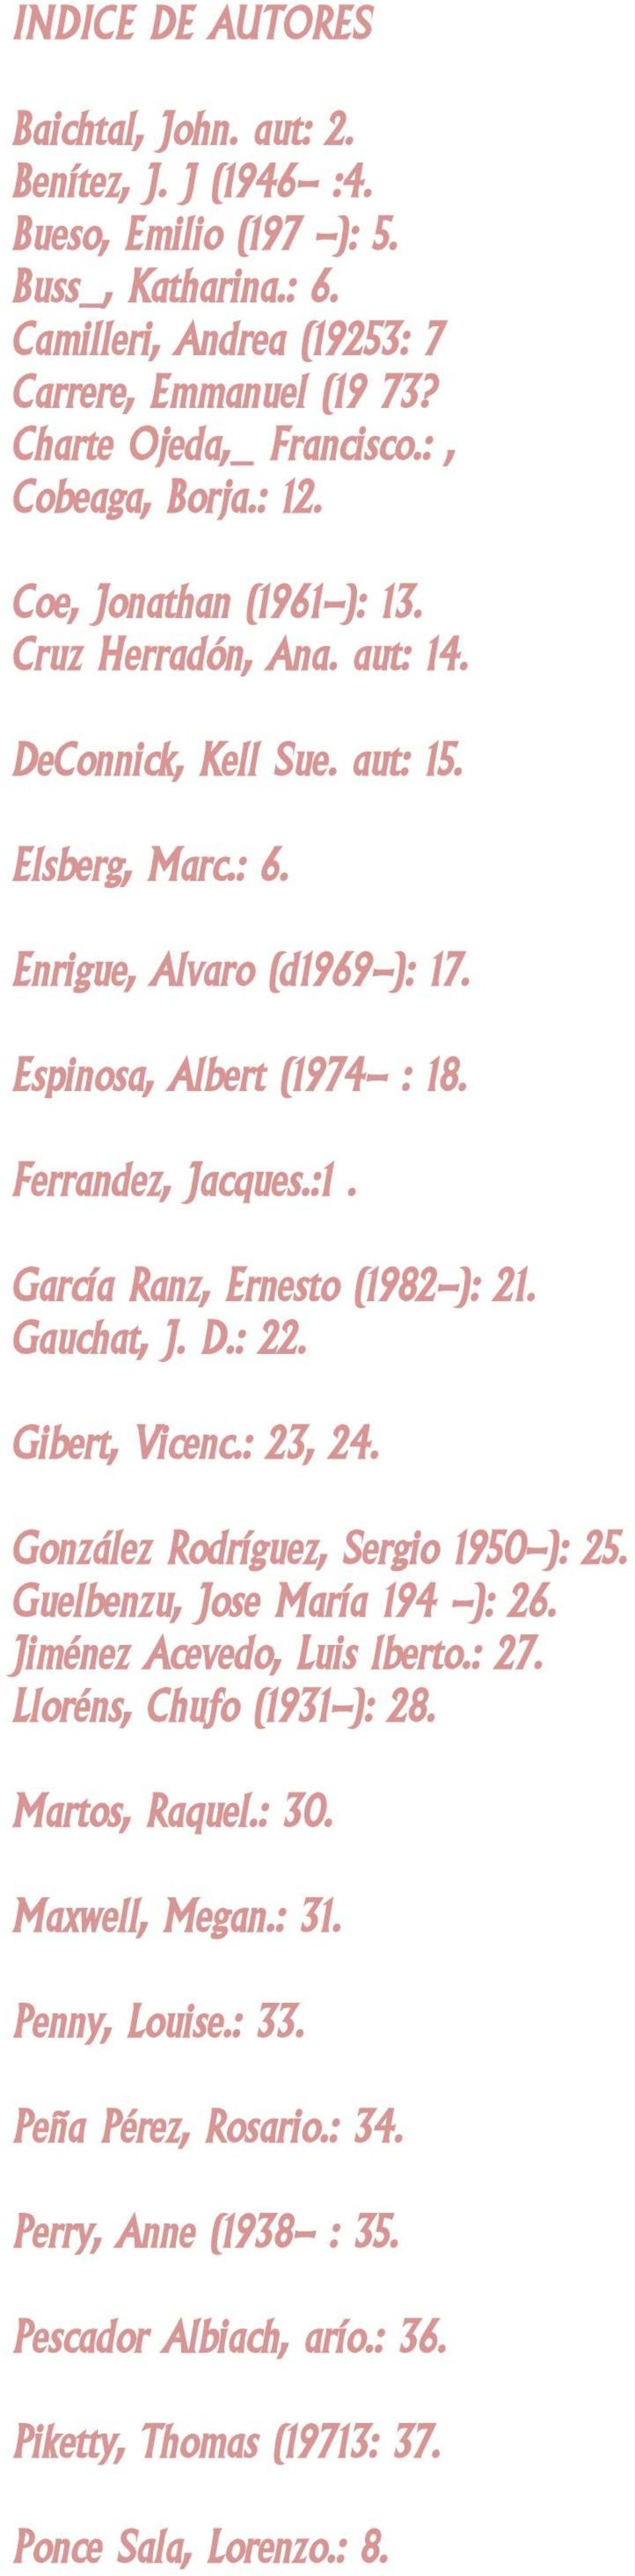 Ferrandez, Jacques.:1. García Ranz, Ernesto (1982-): 21. Gauchat, J. D.: 22. Gibert, Vicenc.: 23, 24. González Rodríguez, Sergio 1950-): 25. Guelbenzu, Jose María 194 -): 26.